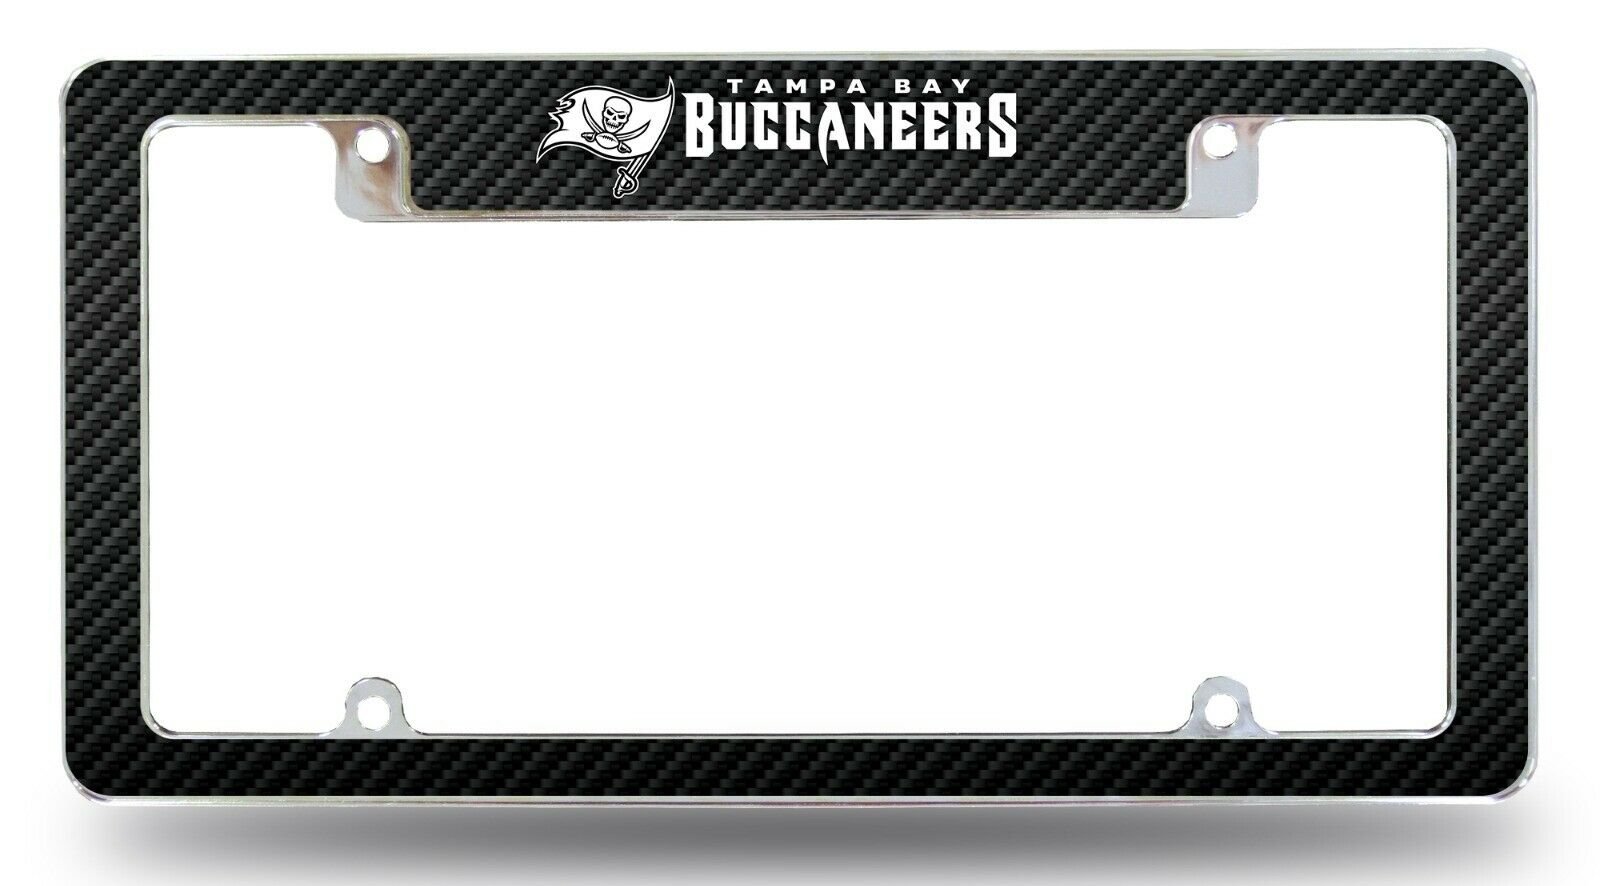 Tampa Bay Buccaneers Metal License Plate Frame Tag Cover, Carbon Fiber Design, 12x6 Inch